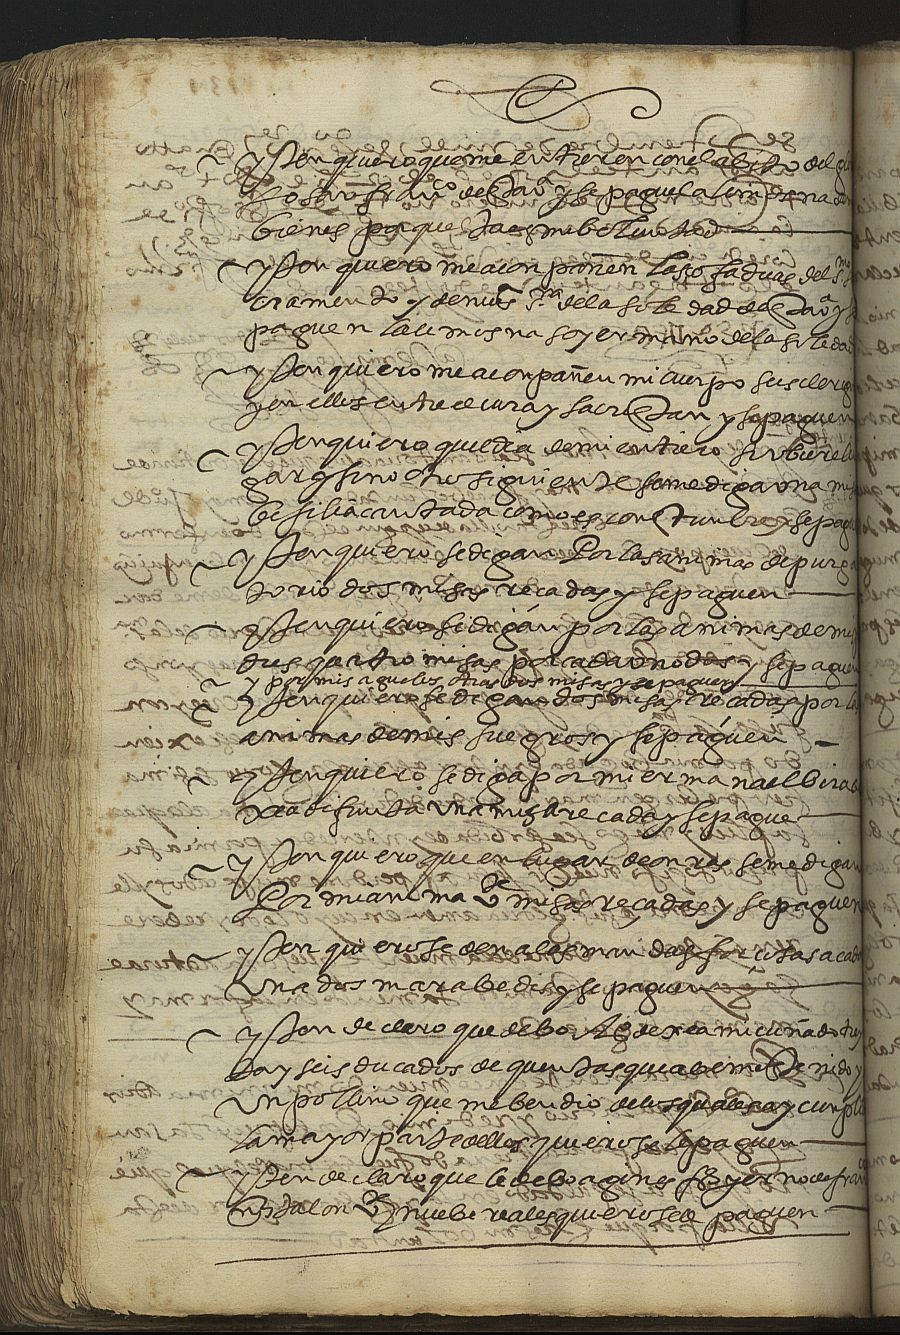 Testamento de Juan de Egea Llorente, marido de María Robles, vecinos de Cehegín.